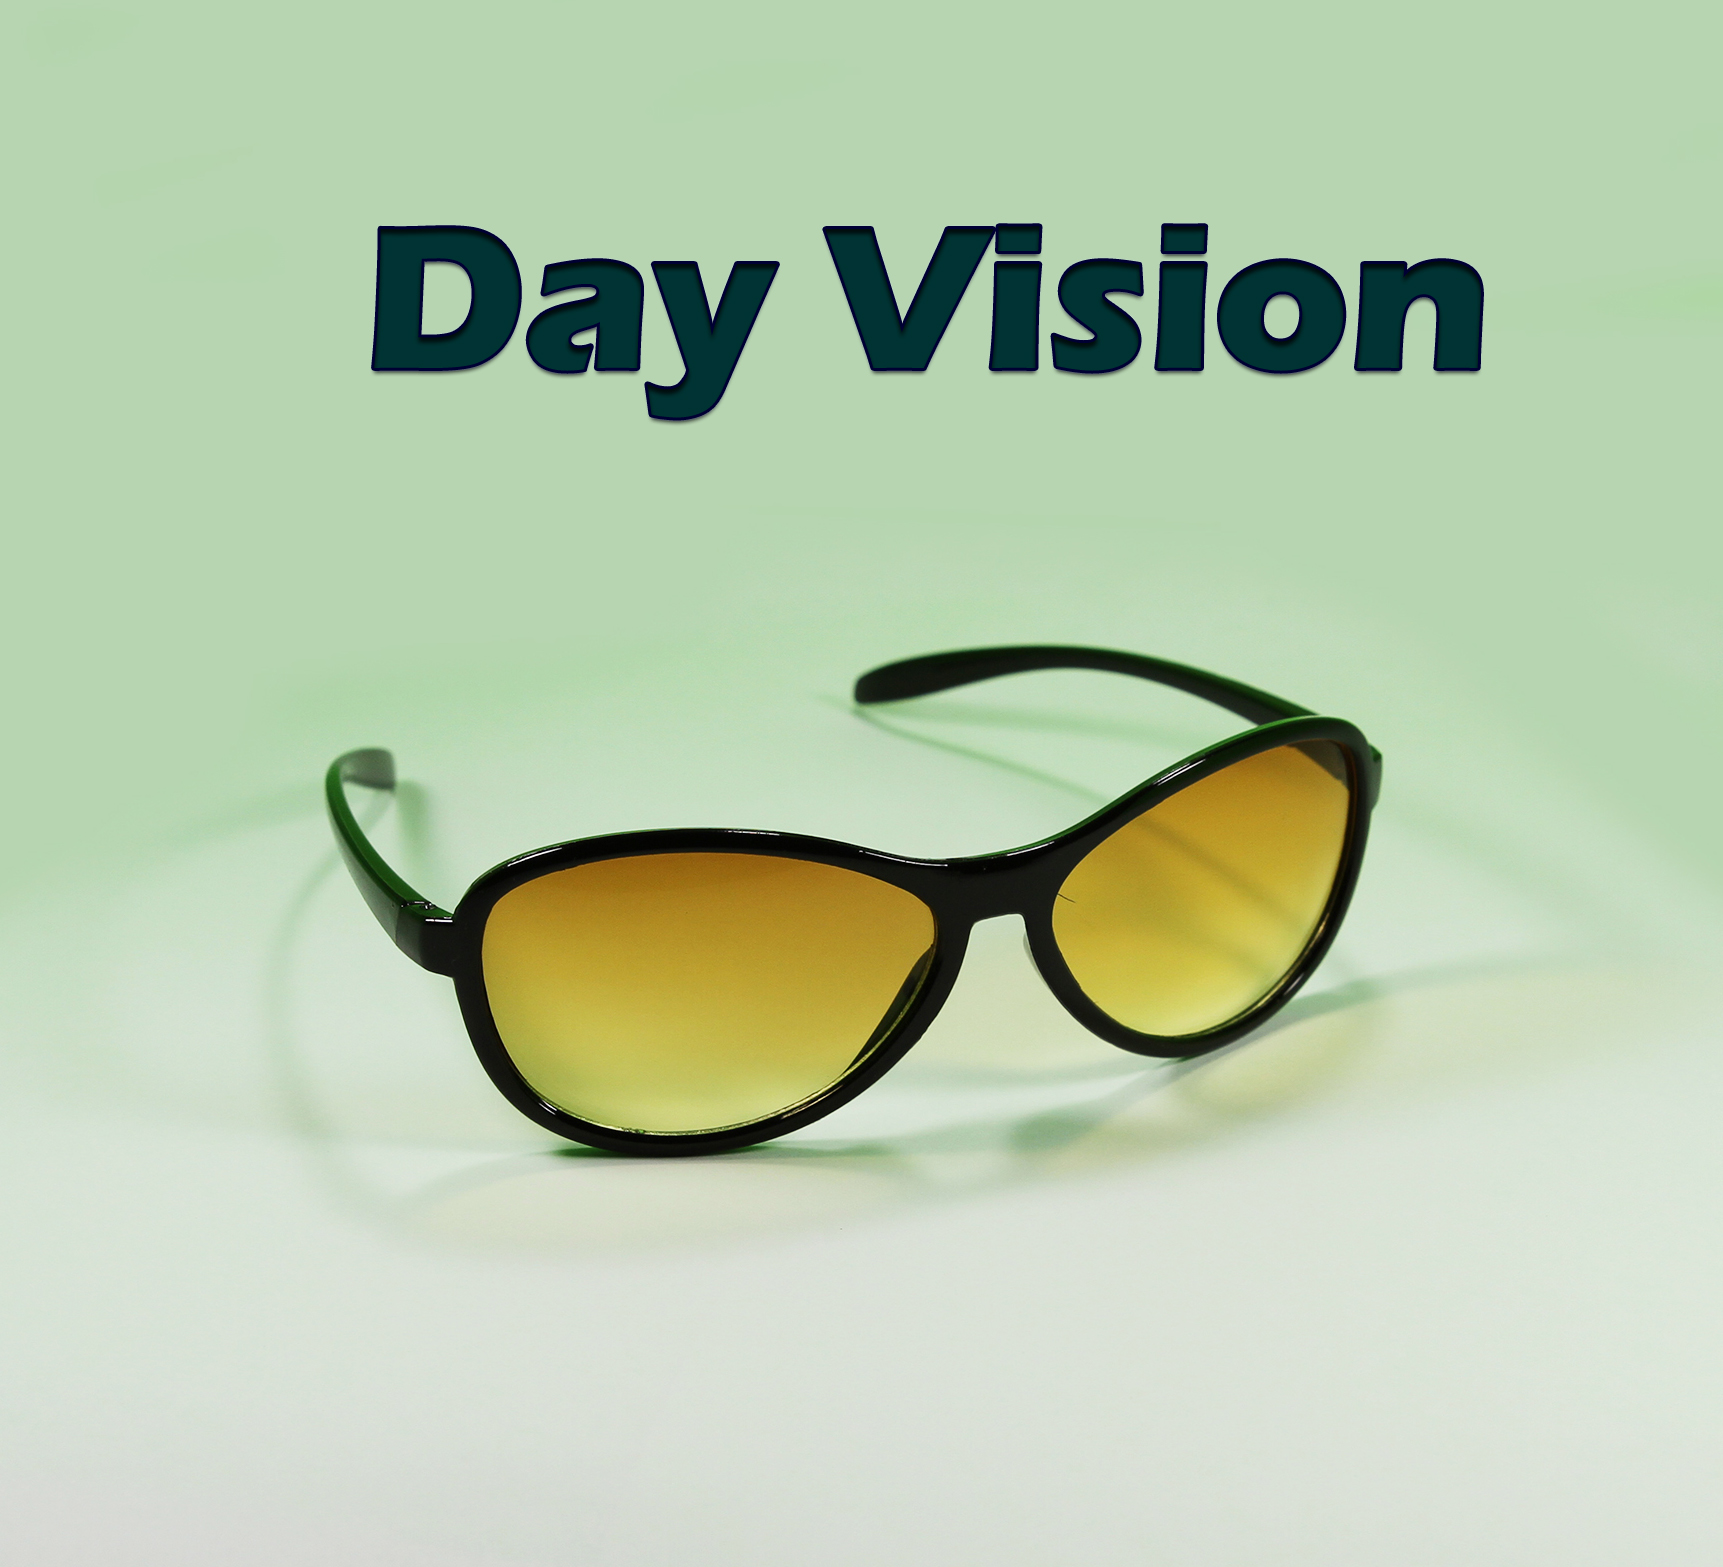 Hd Vision Smart View Elite Anti Glare Driving Lens Sunglasses Pack Of 2 Ebay